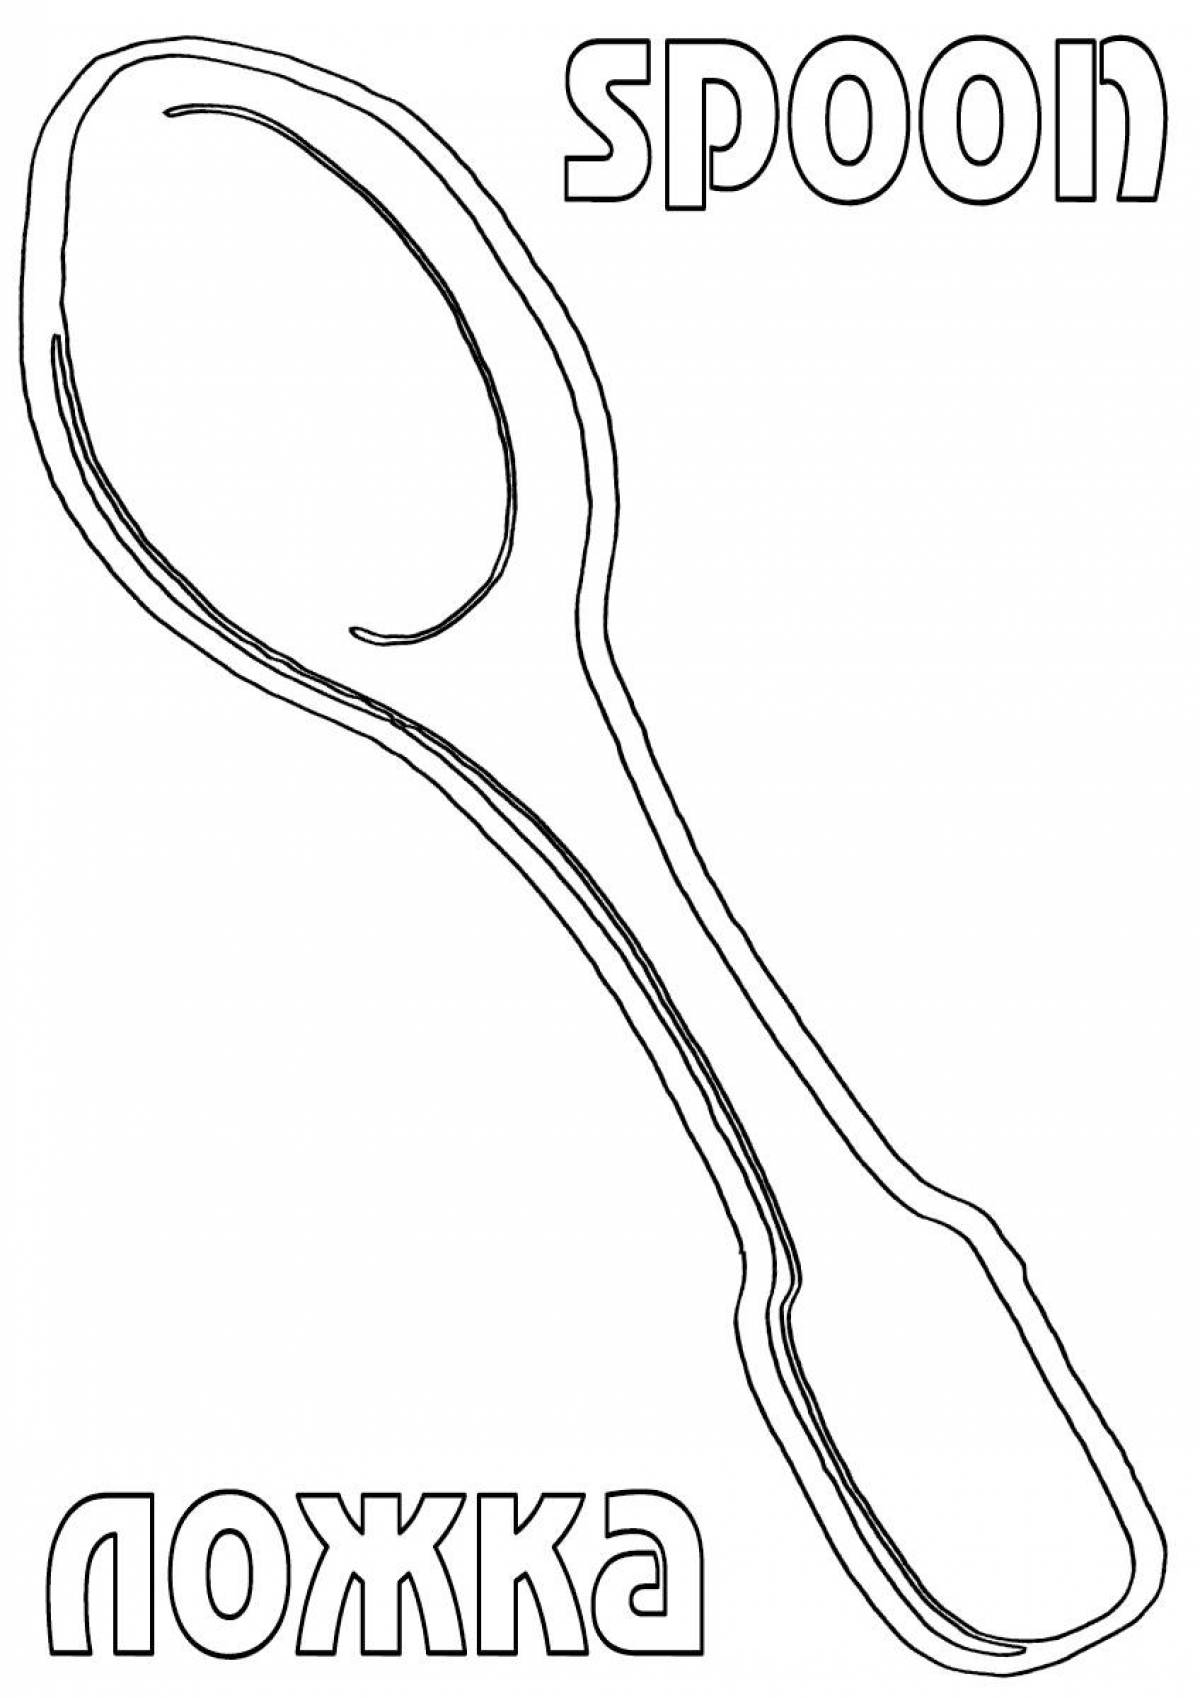 Wooden spoon #3